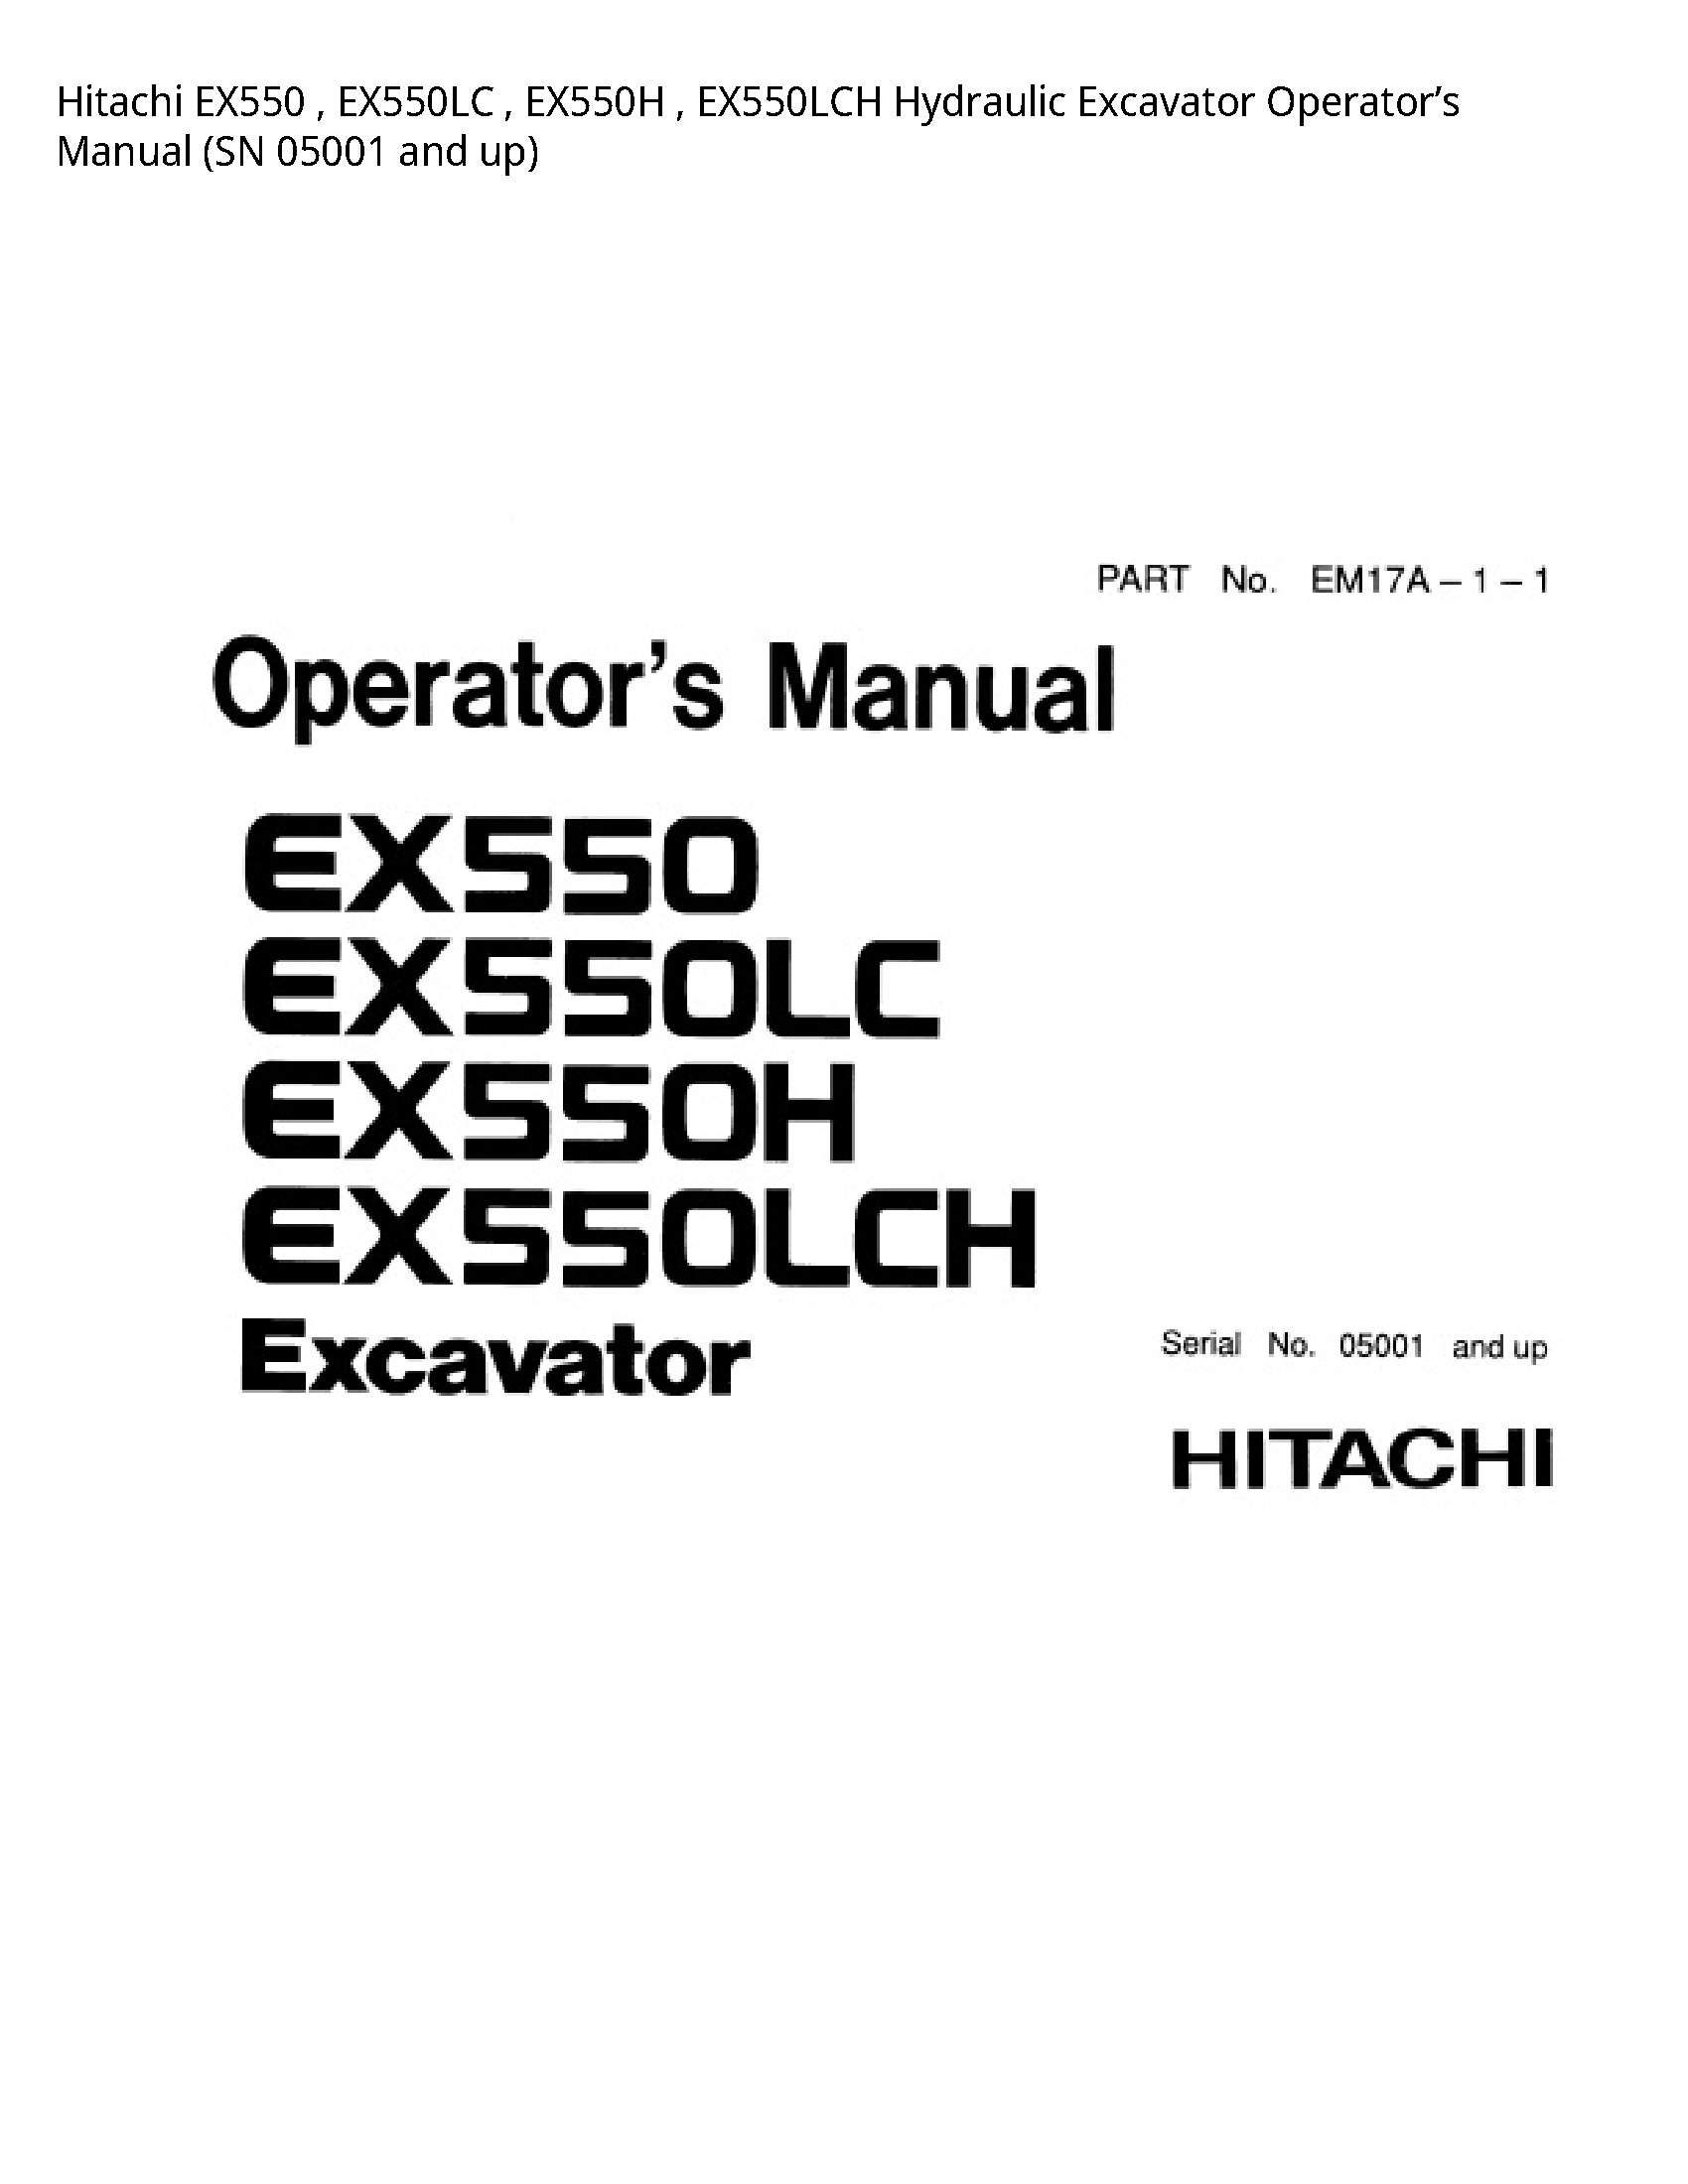 Hitachi EX550 Hydraulic Excavator Operator’s manual